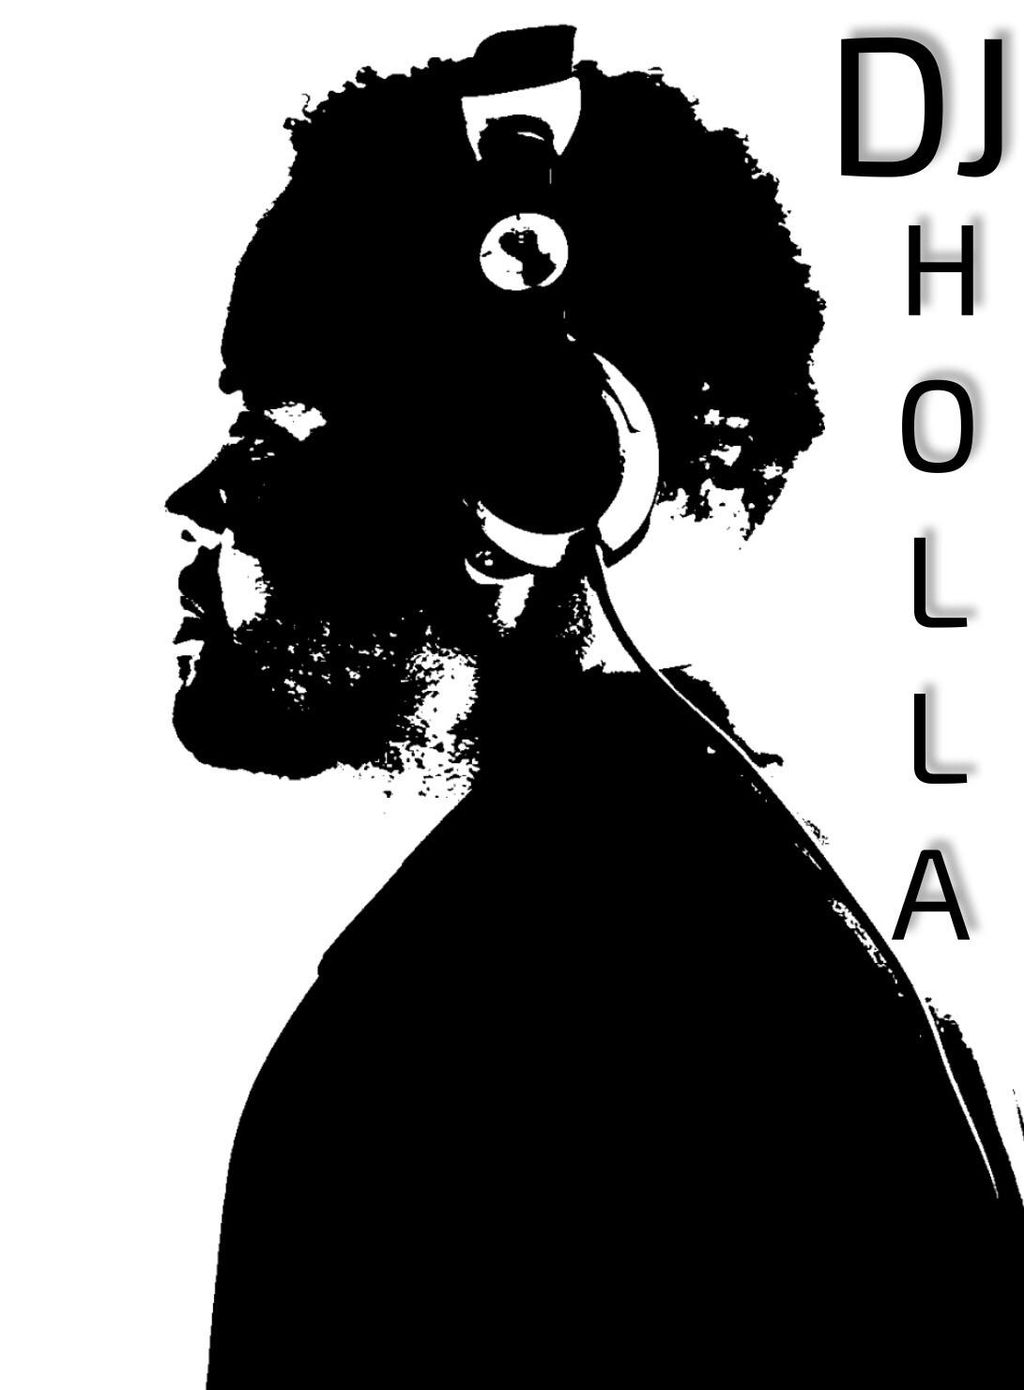 Mr. International DJ Holla